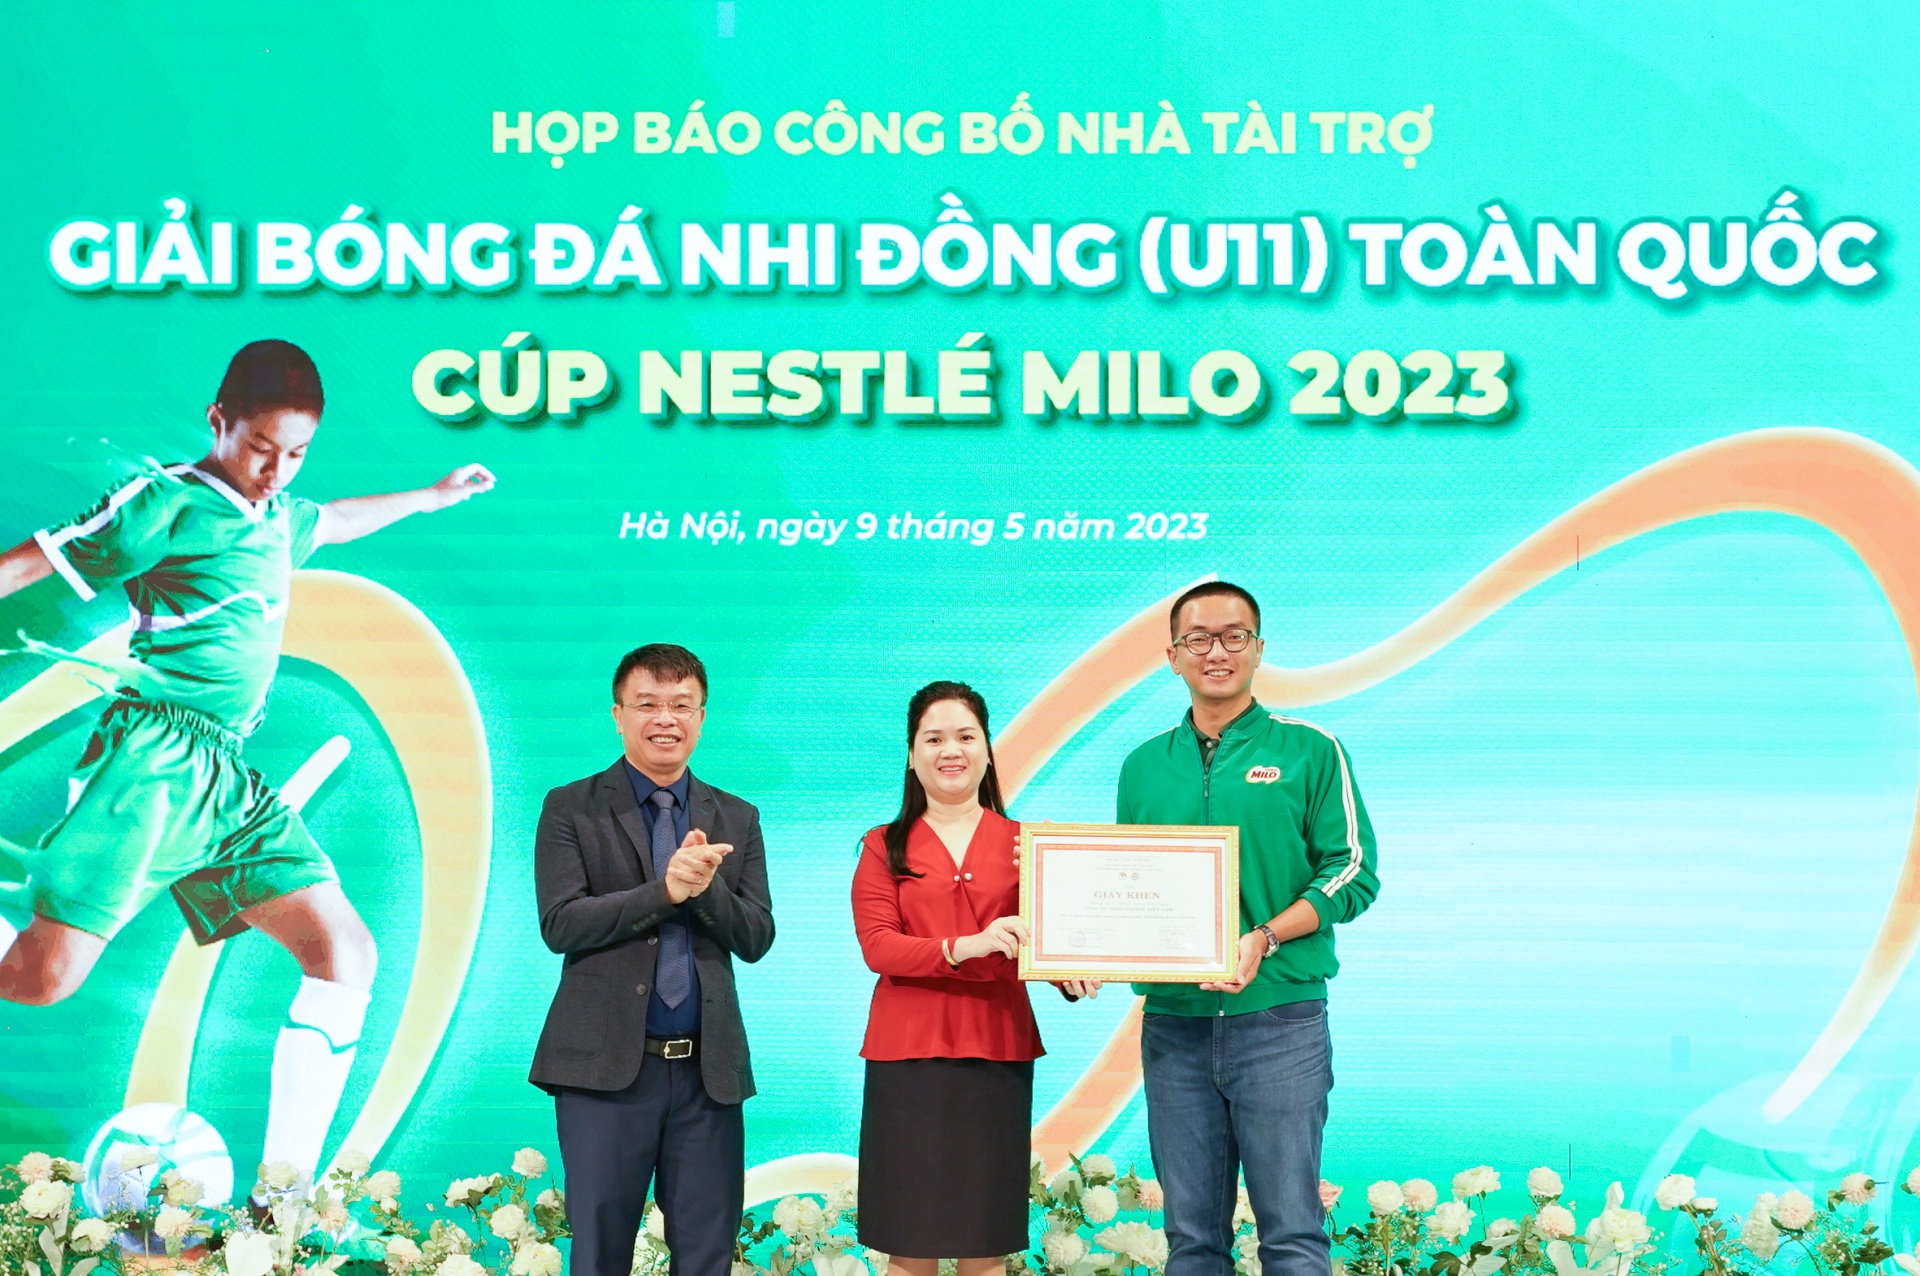 Nestlé MILO supports National U11 Football Tournament